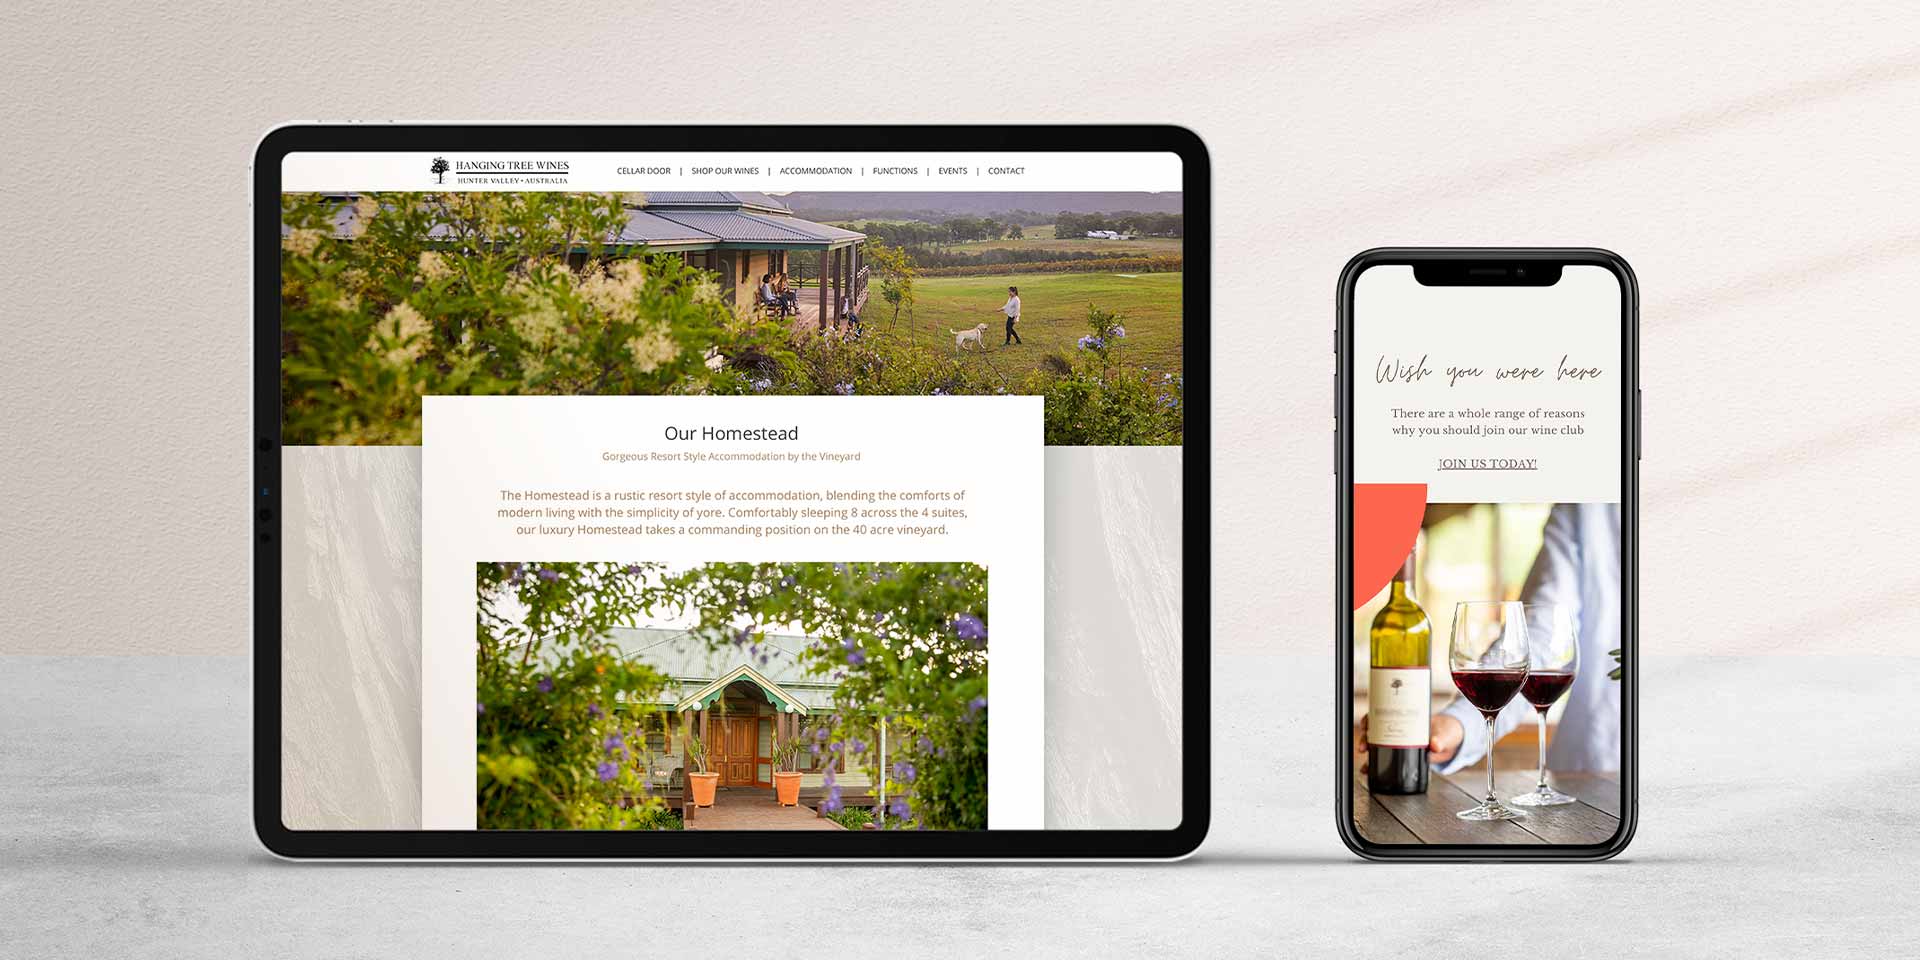 Hanging Tree Wines Website evolution